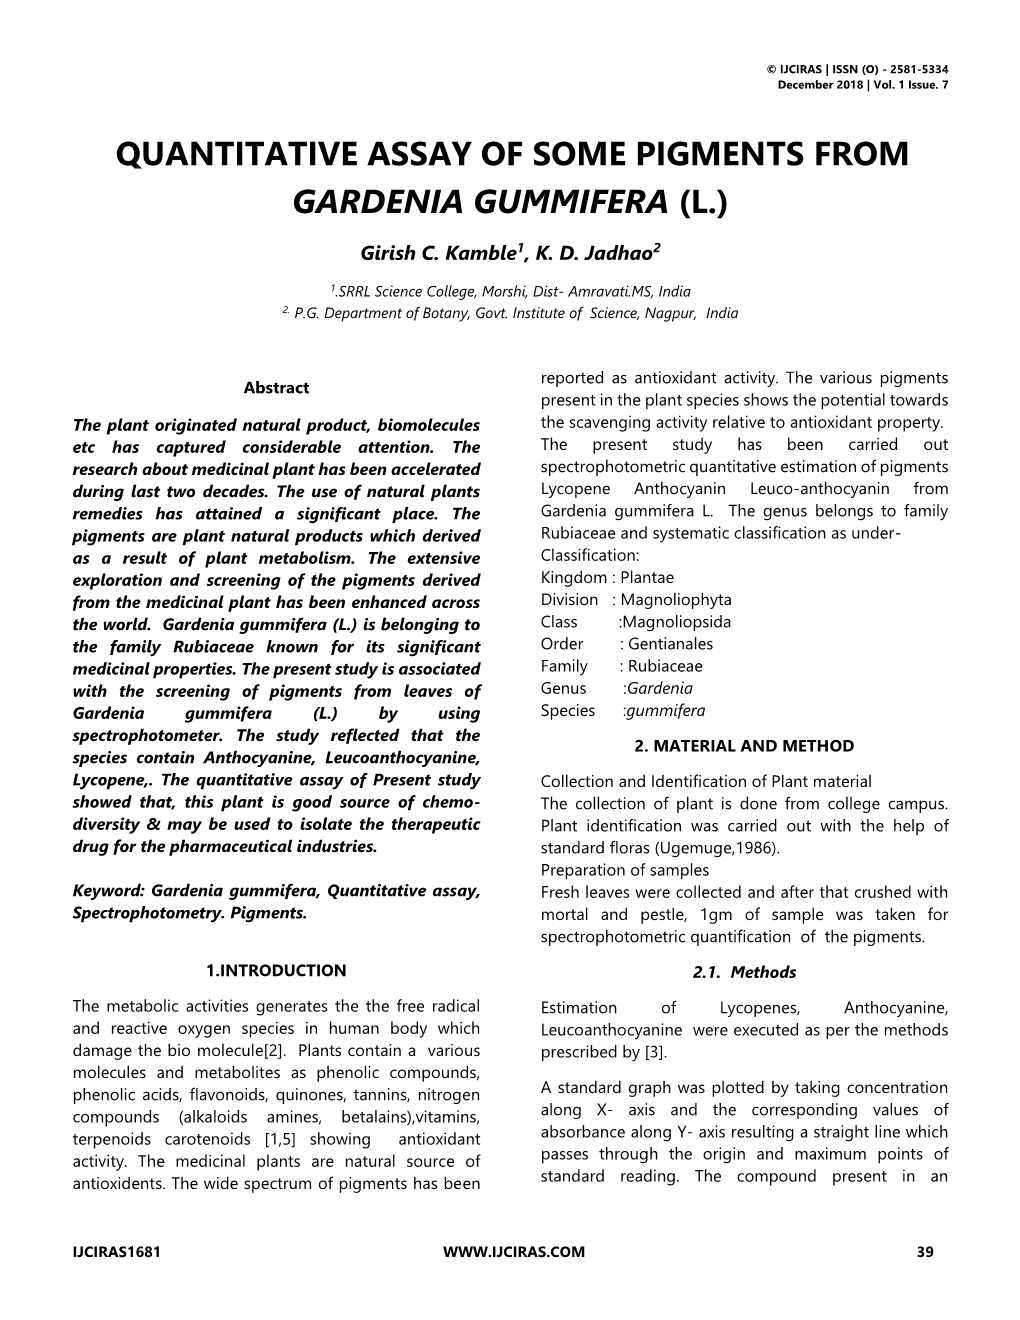 Quantitative Assay of Some Pigments from Gardenia Gummifera (L.)